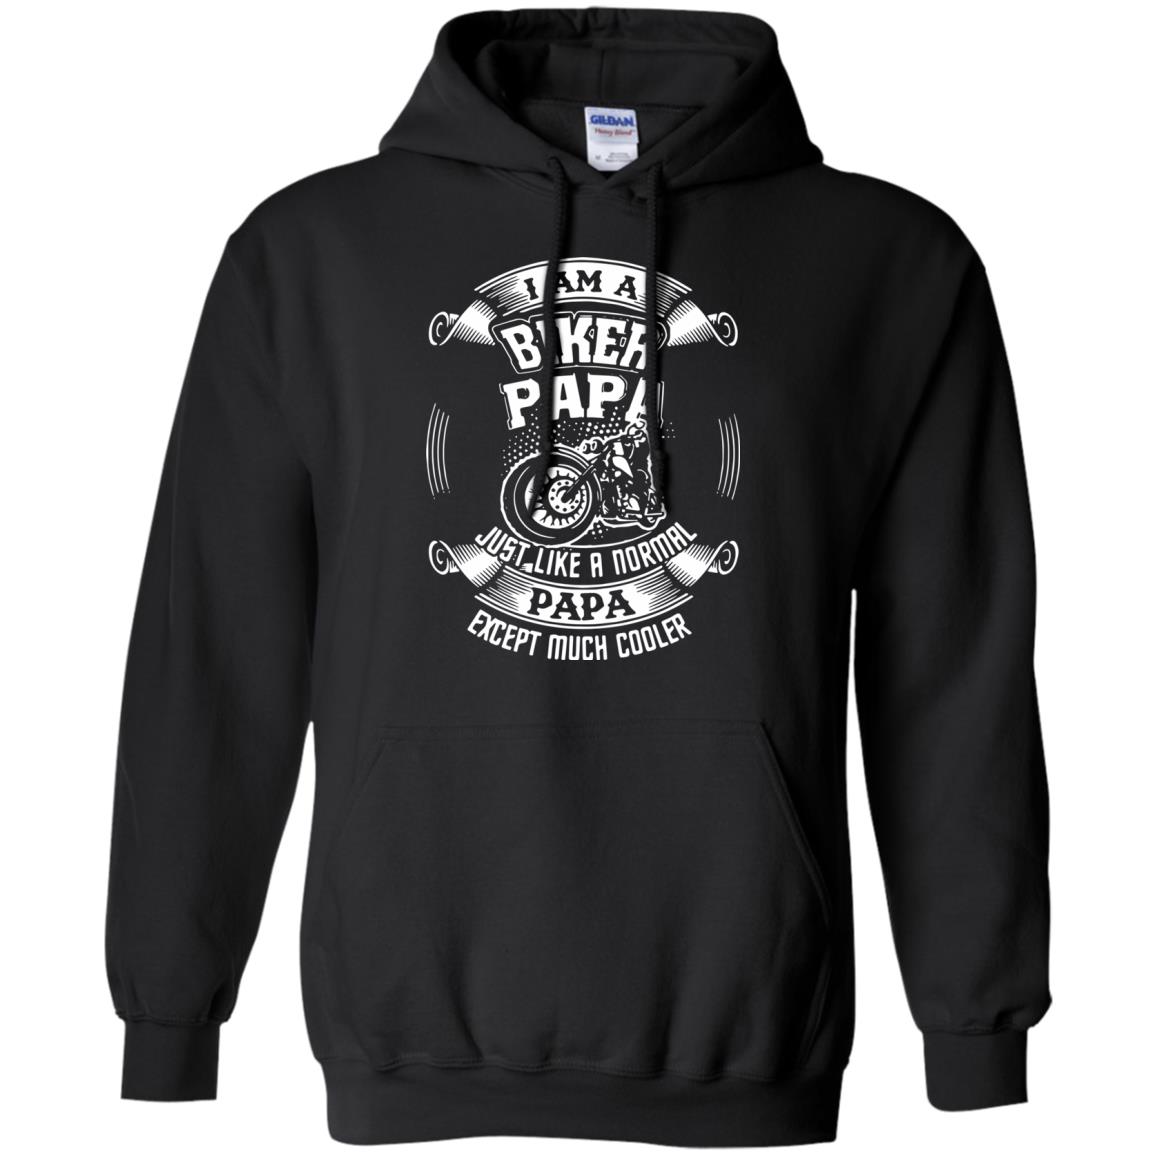 I'm A Biker Papa hoodie - black